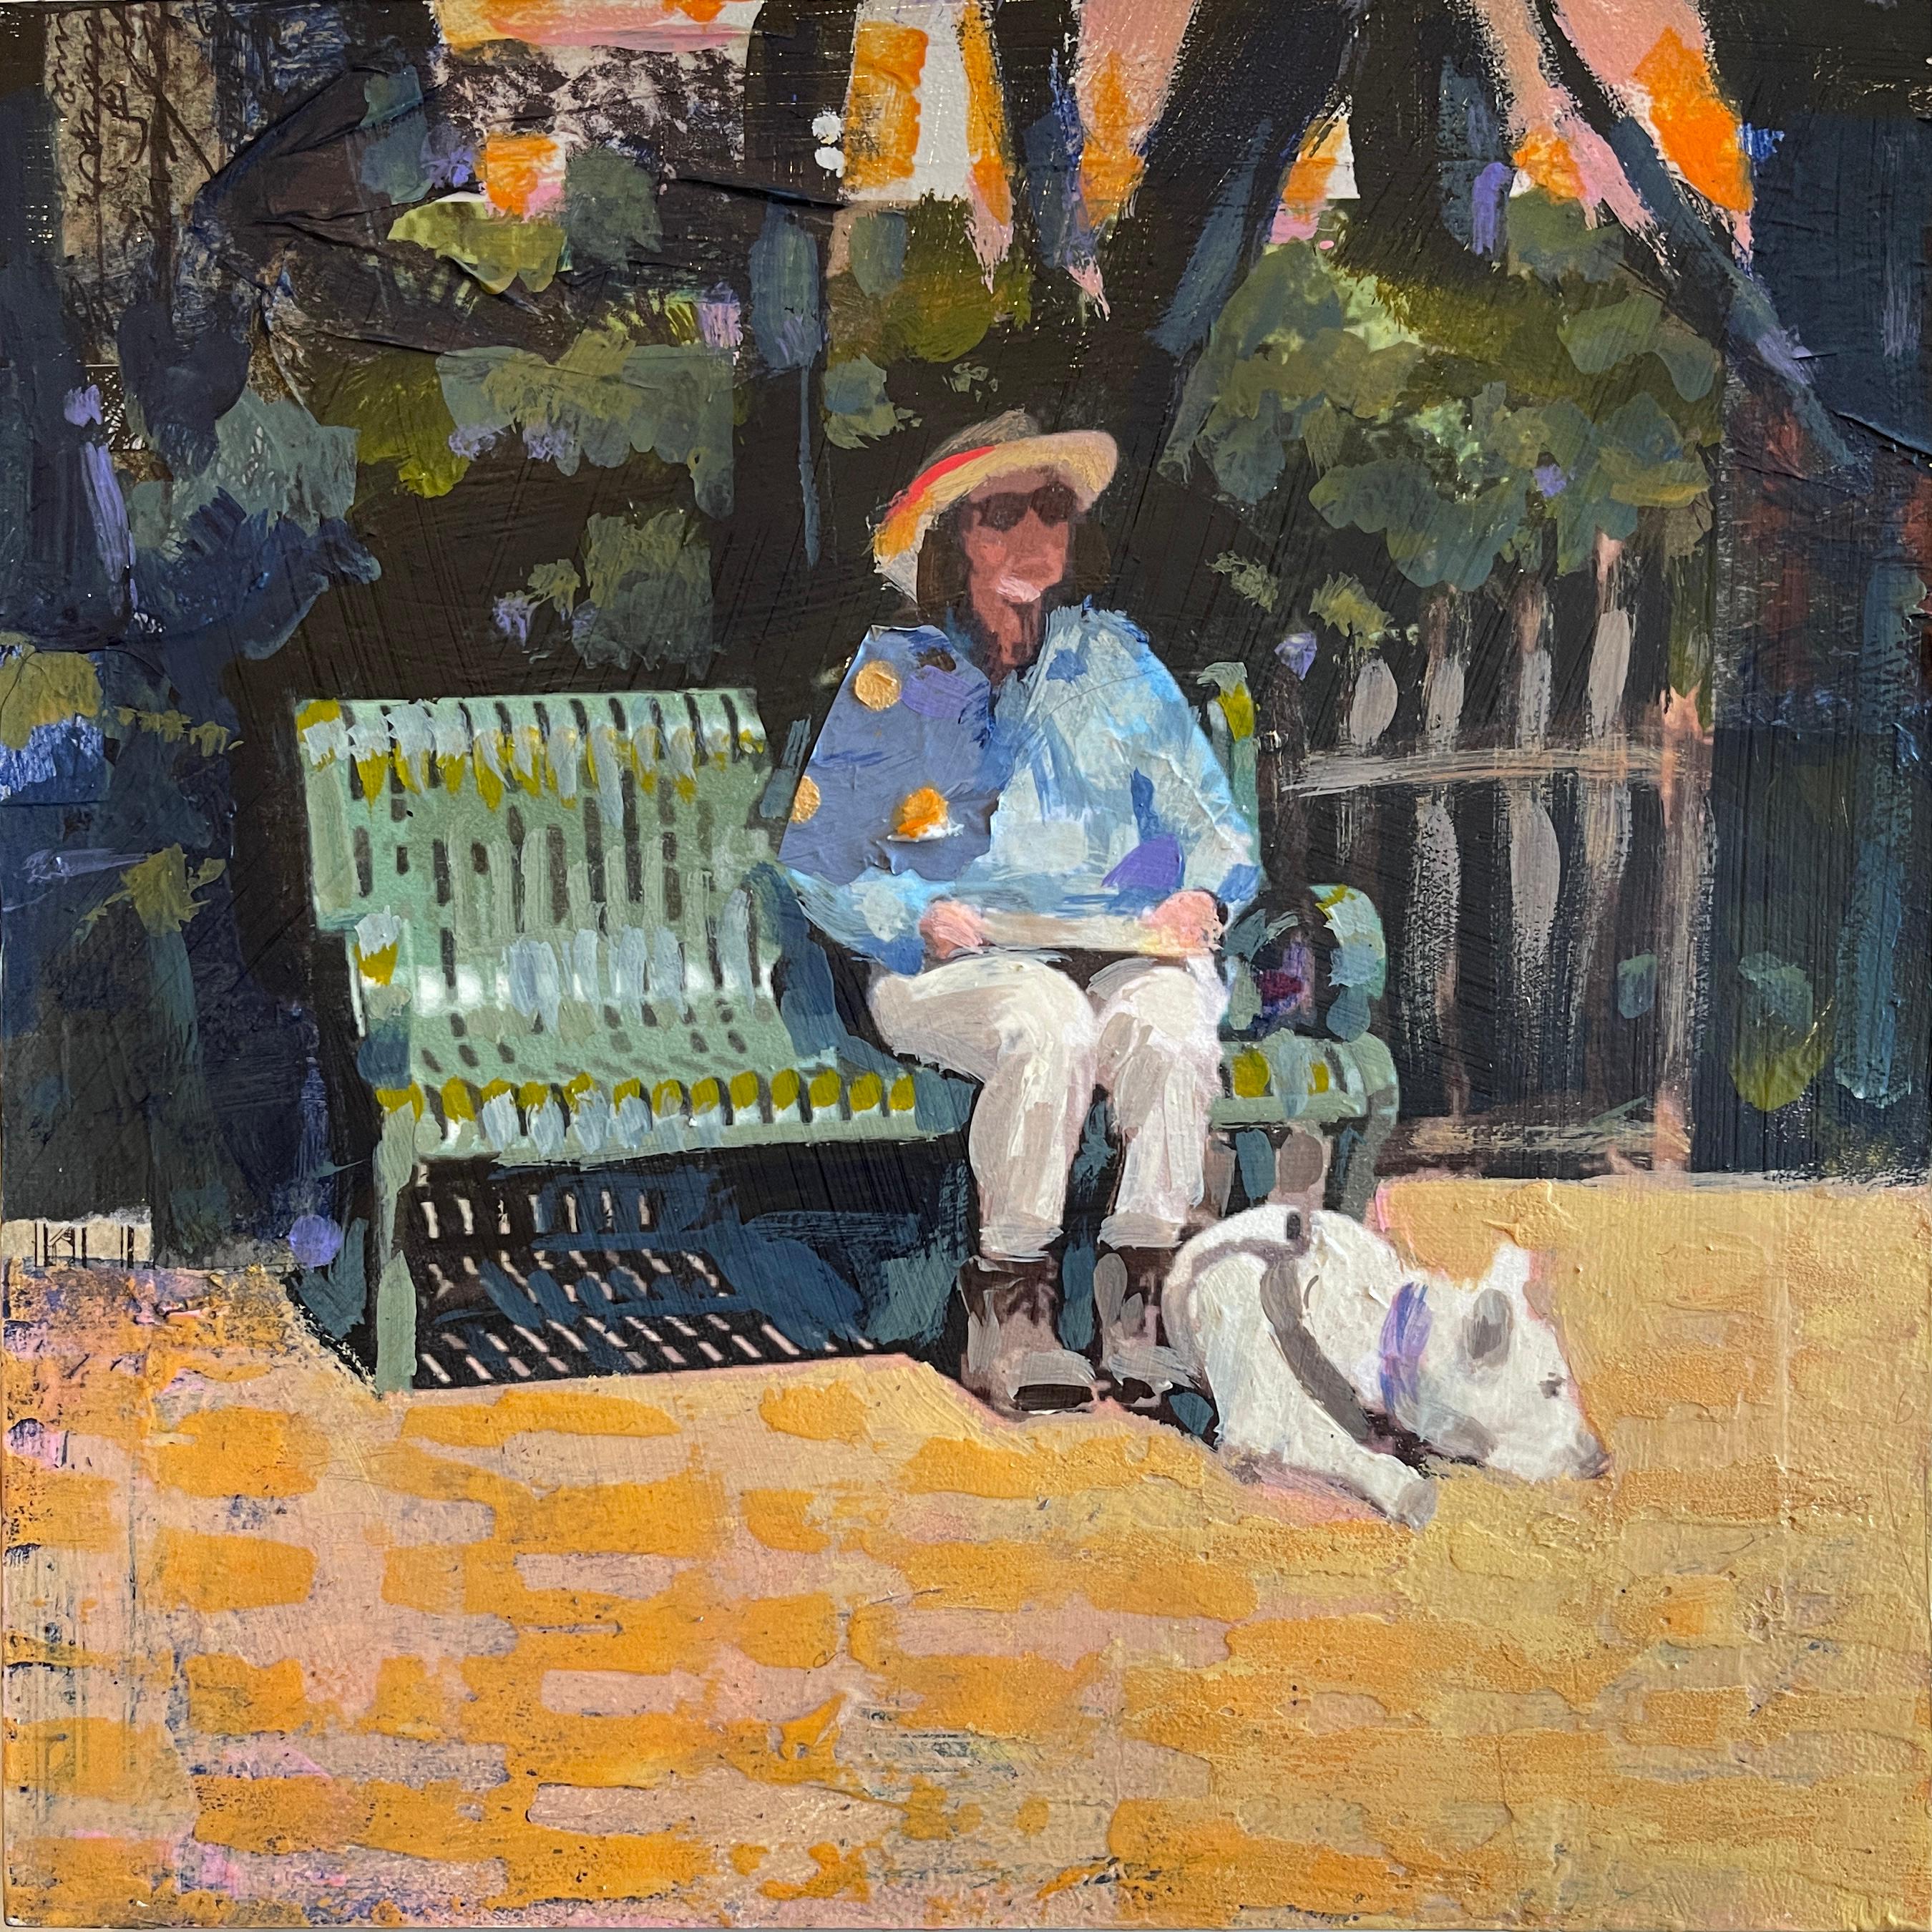 Rest Break in the Gardens, Original Painting - Mixed Media Art by Darlene McElroy